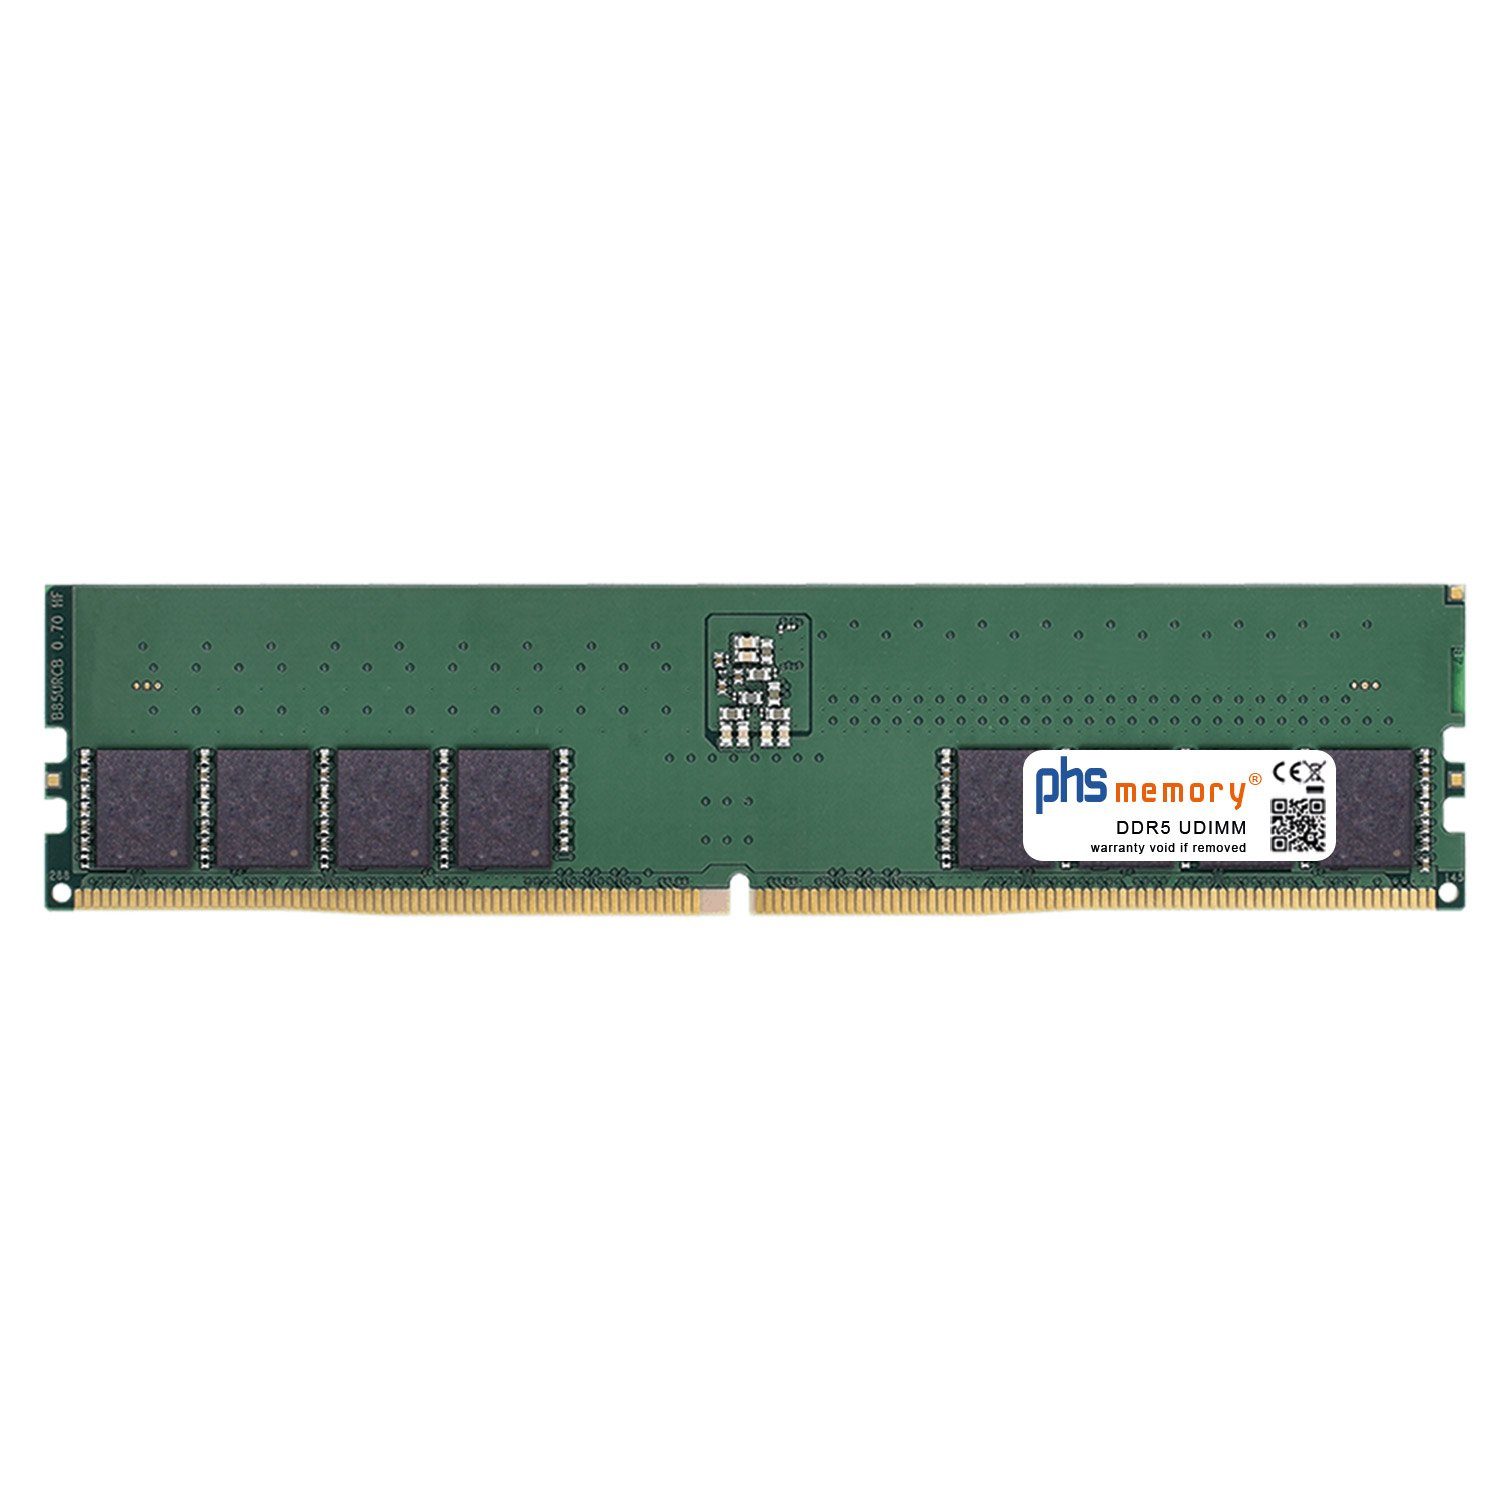 PHS-memory RAM für Captiva Ultimate Gaming I67-402 Arbeitsspeicher